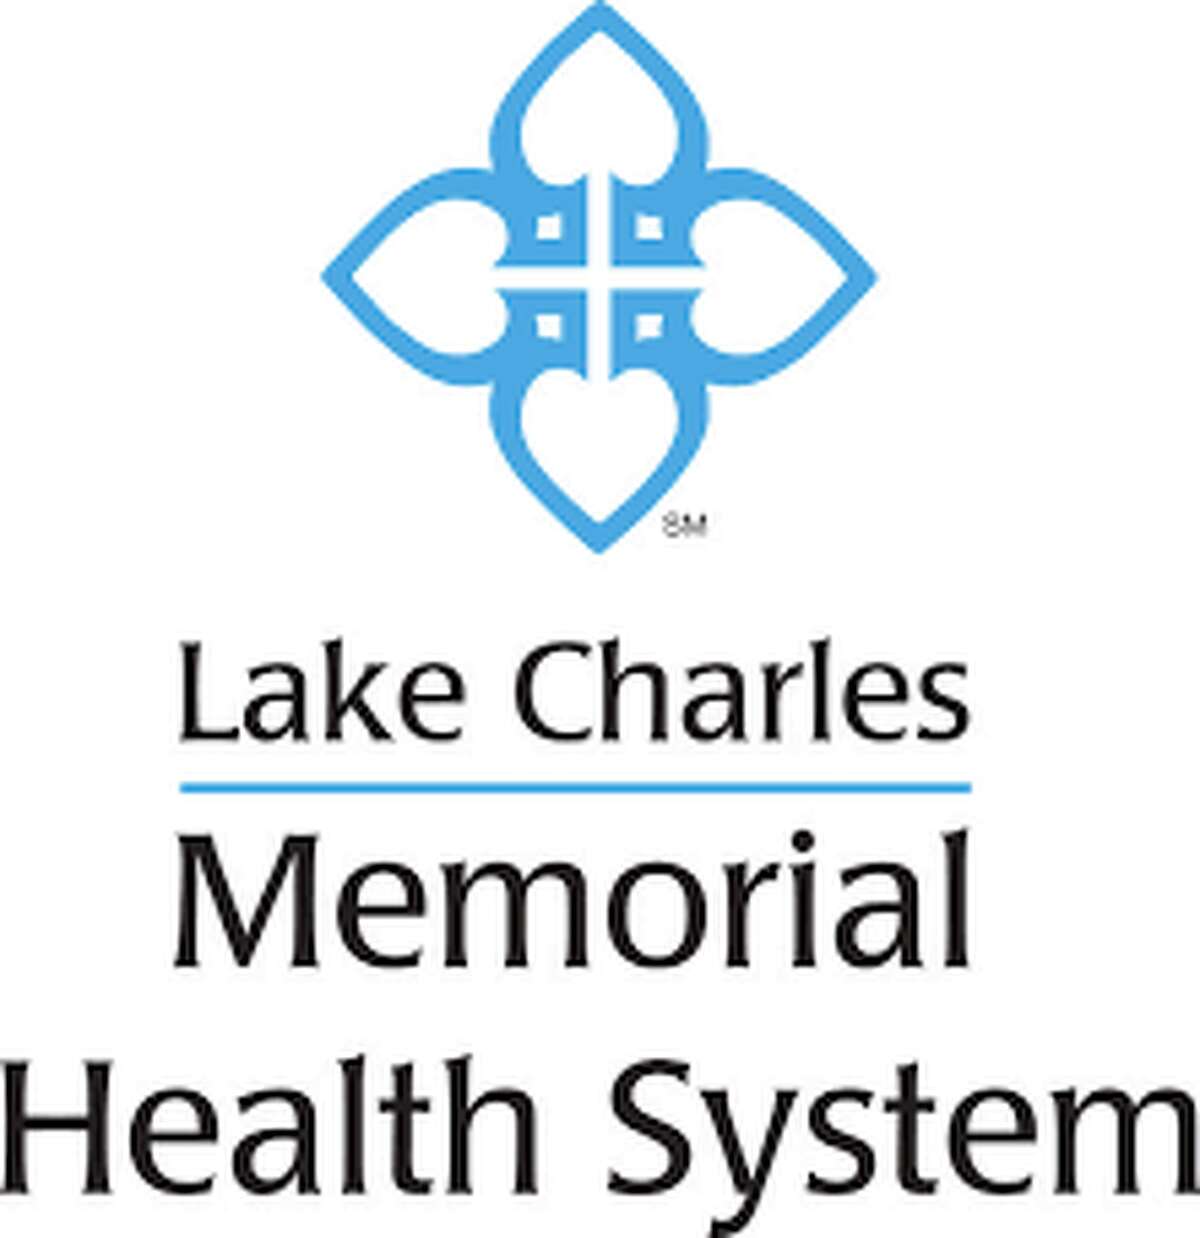 Lake Charles Memorial Health System is located at 1701 Oak Park Blvd. in Lake Charles.